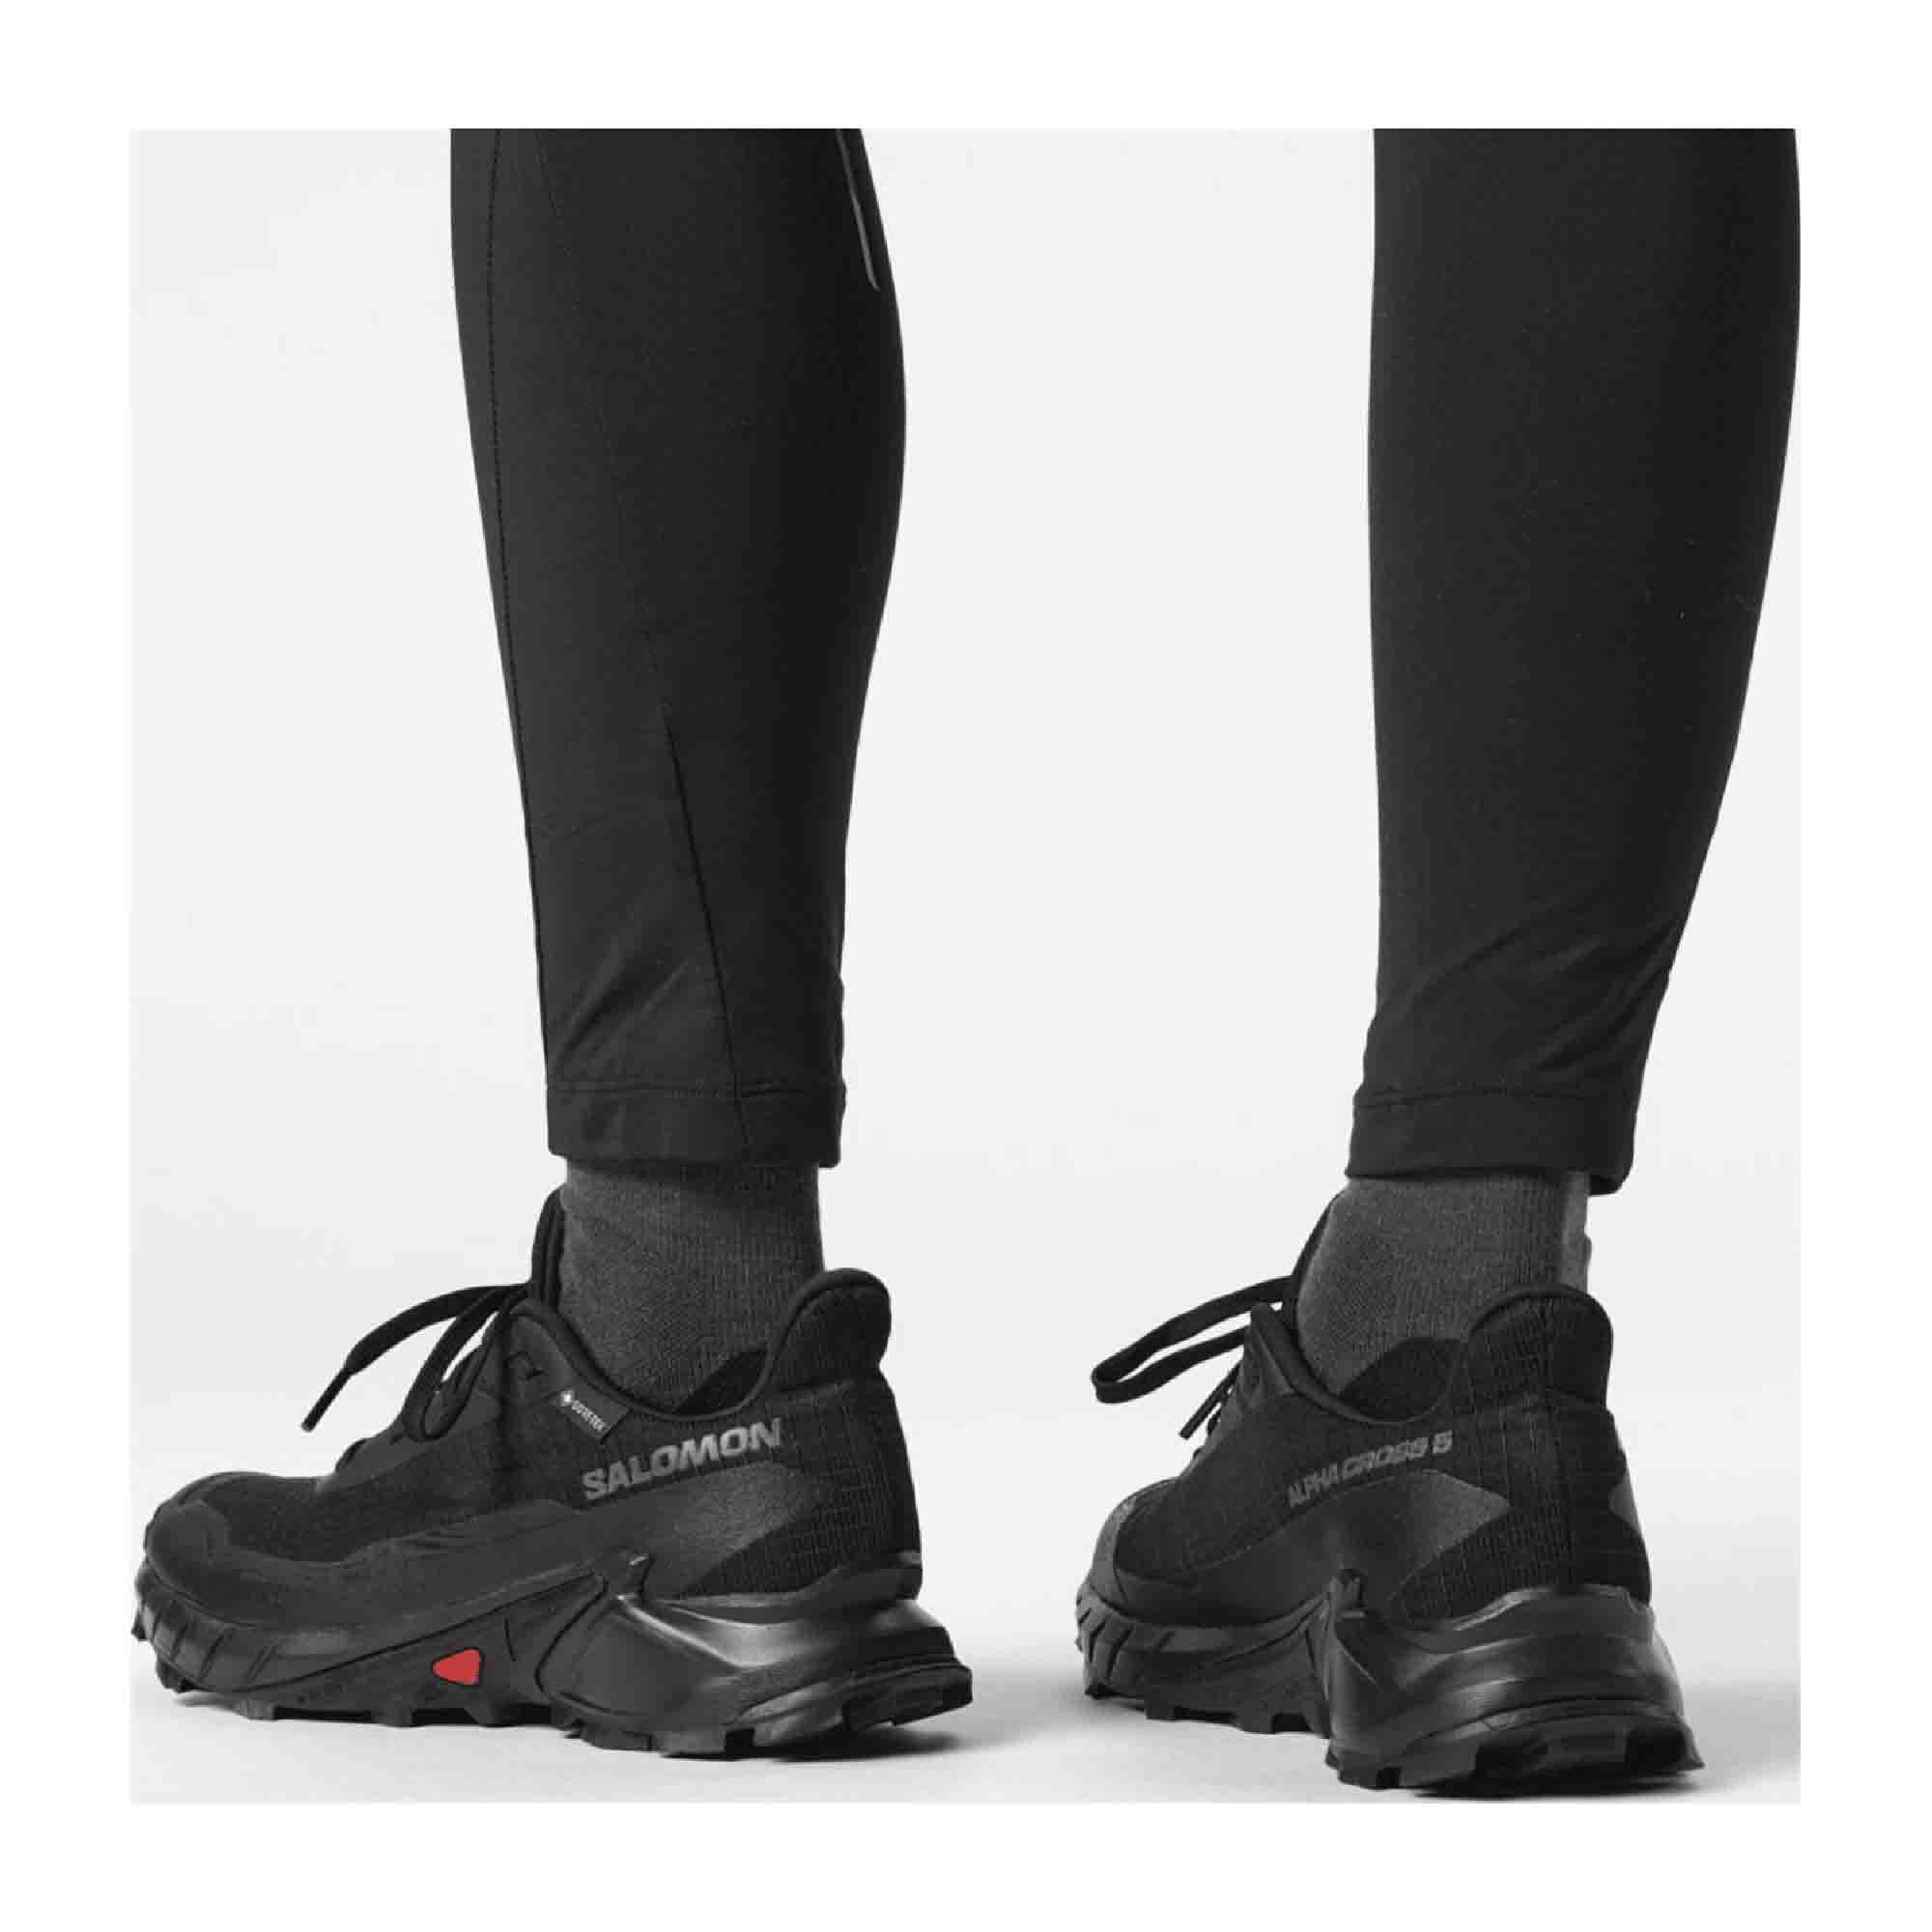 Salomon Alphacross 5 Gore-Tex for women, black, shoes